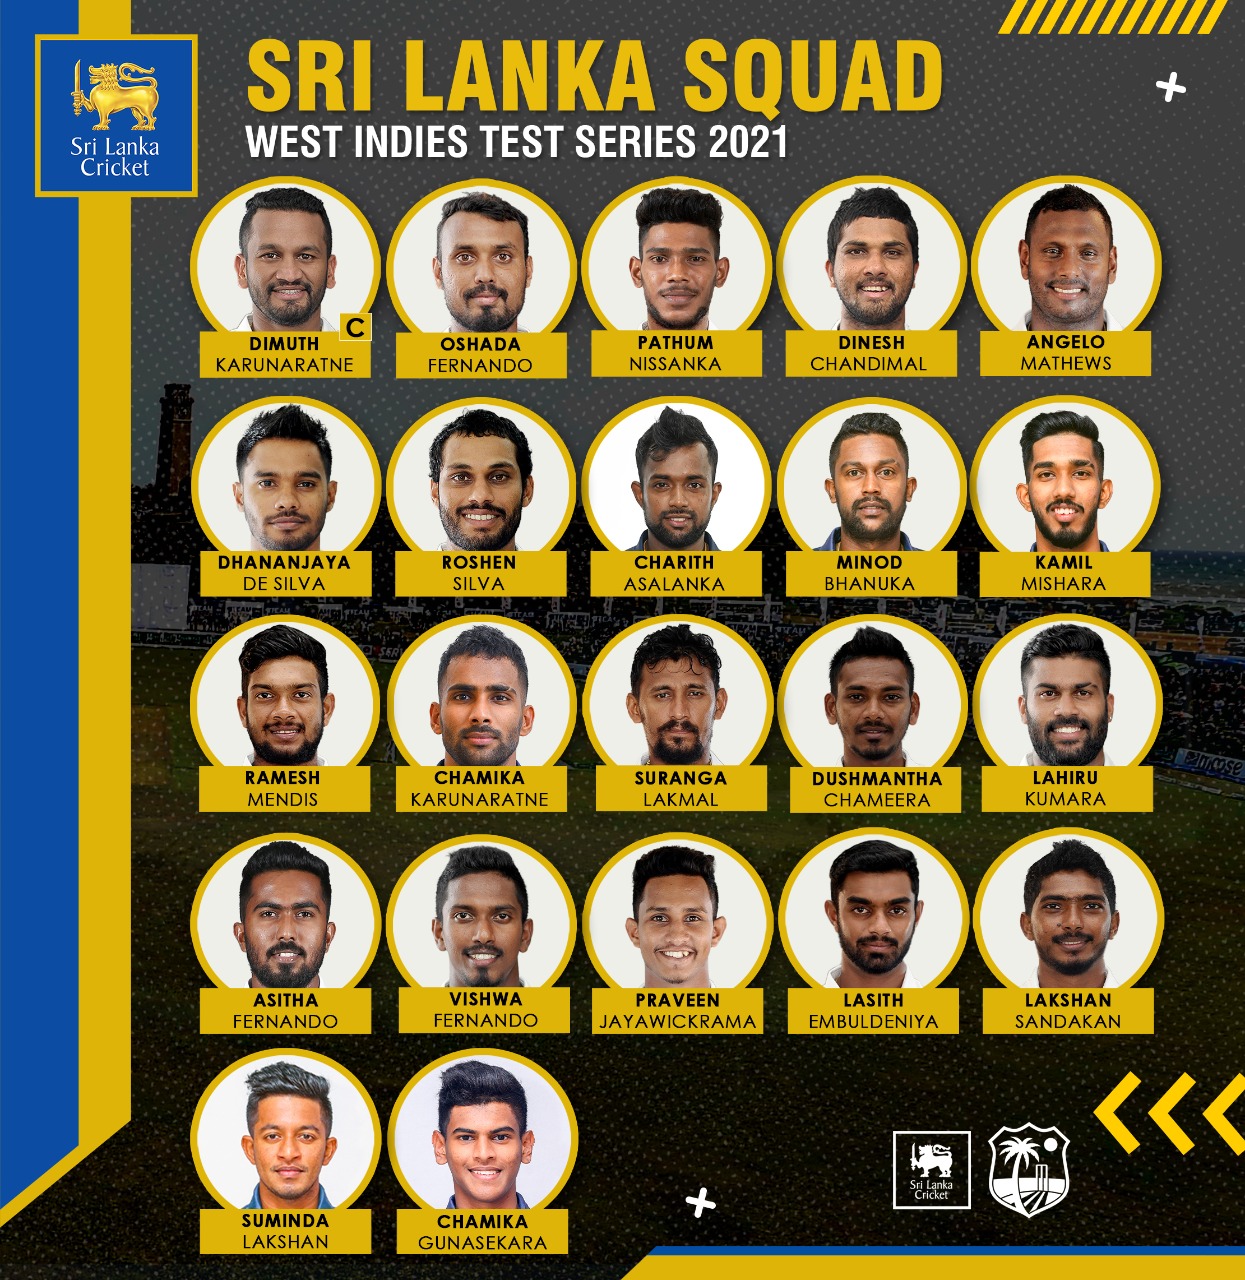 Sri Lanka Test Squad for West Indies Series